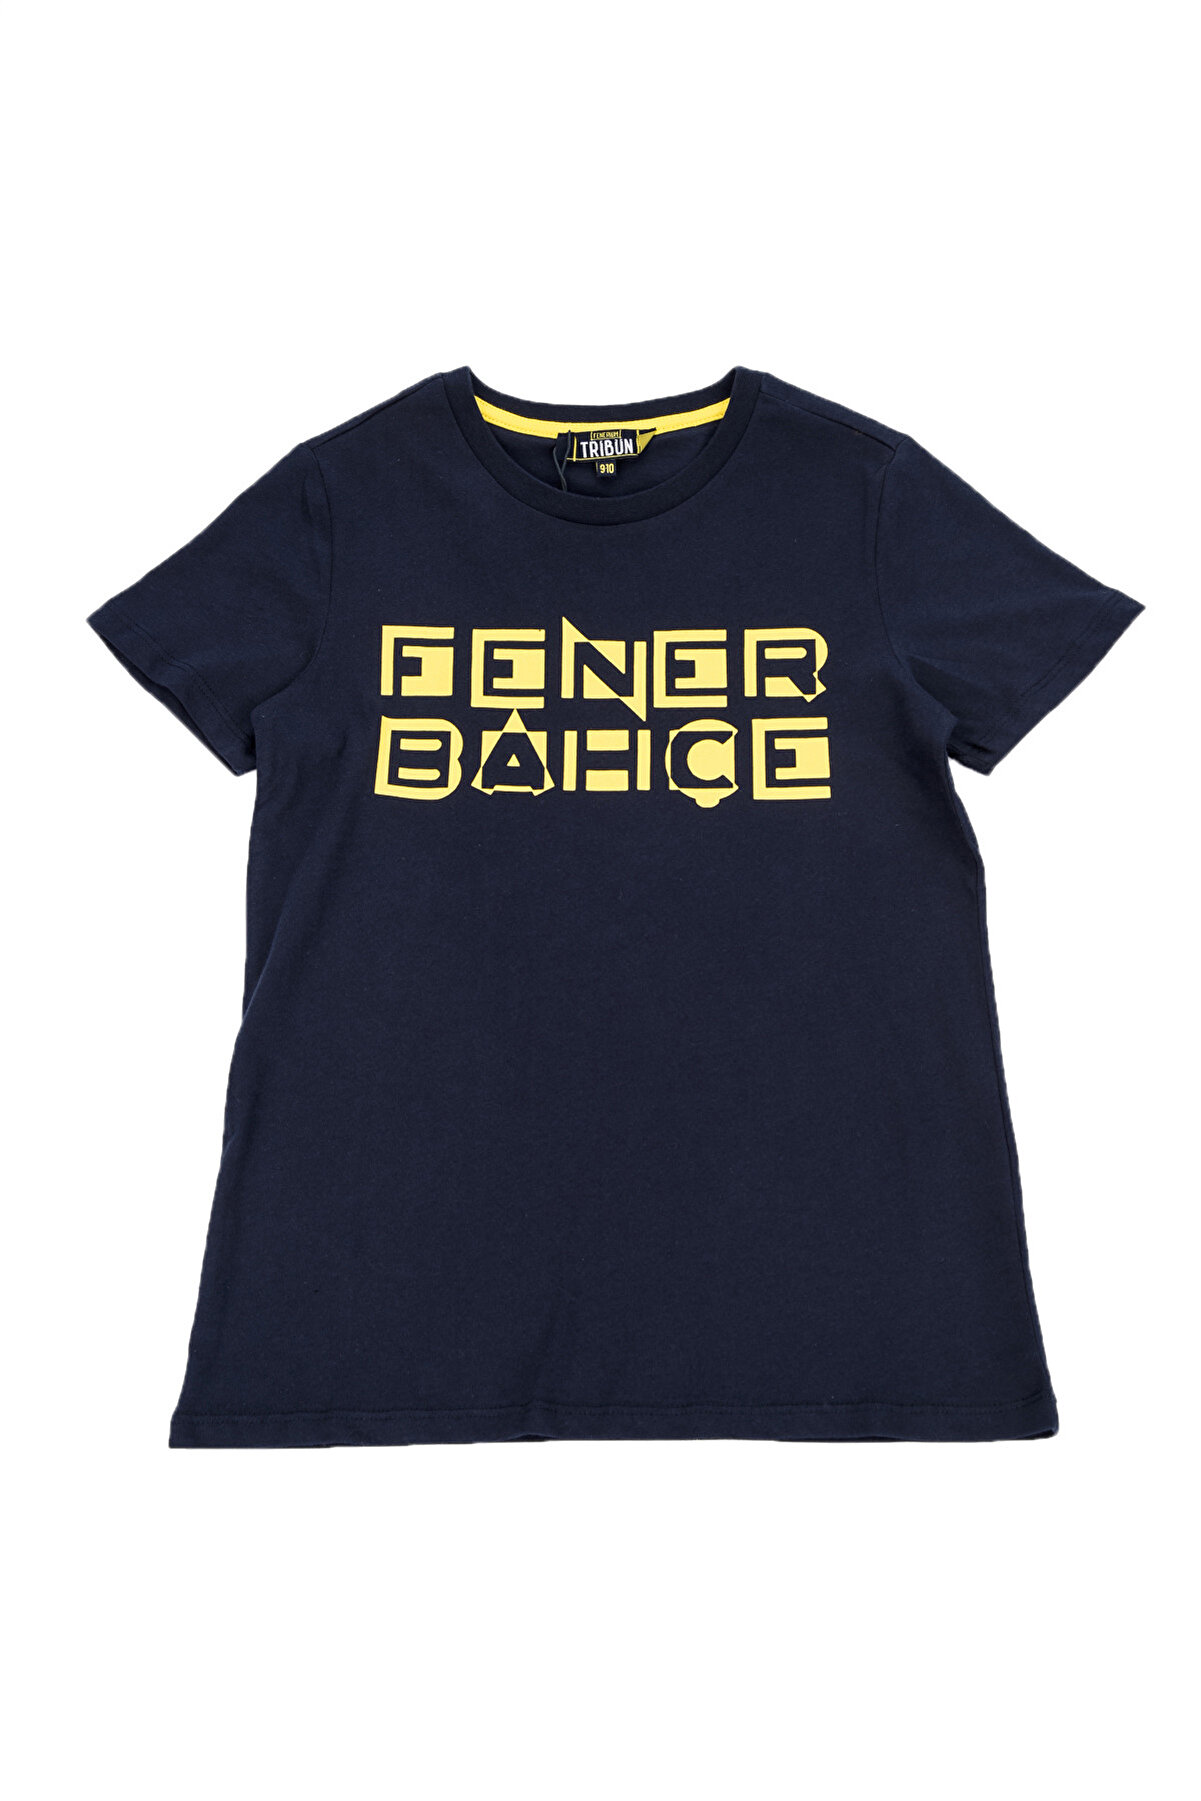 Fenerbahçe Fenerbahçe Çocuk Lacivert T-Shirt - TK010C8K05